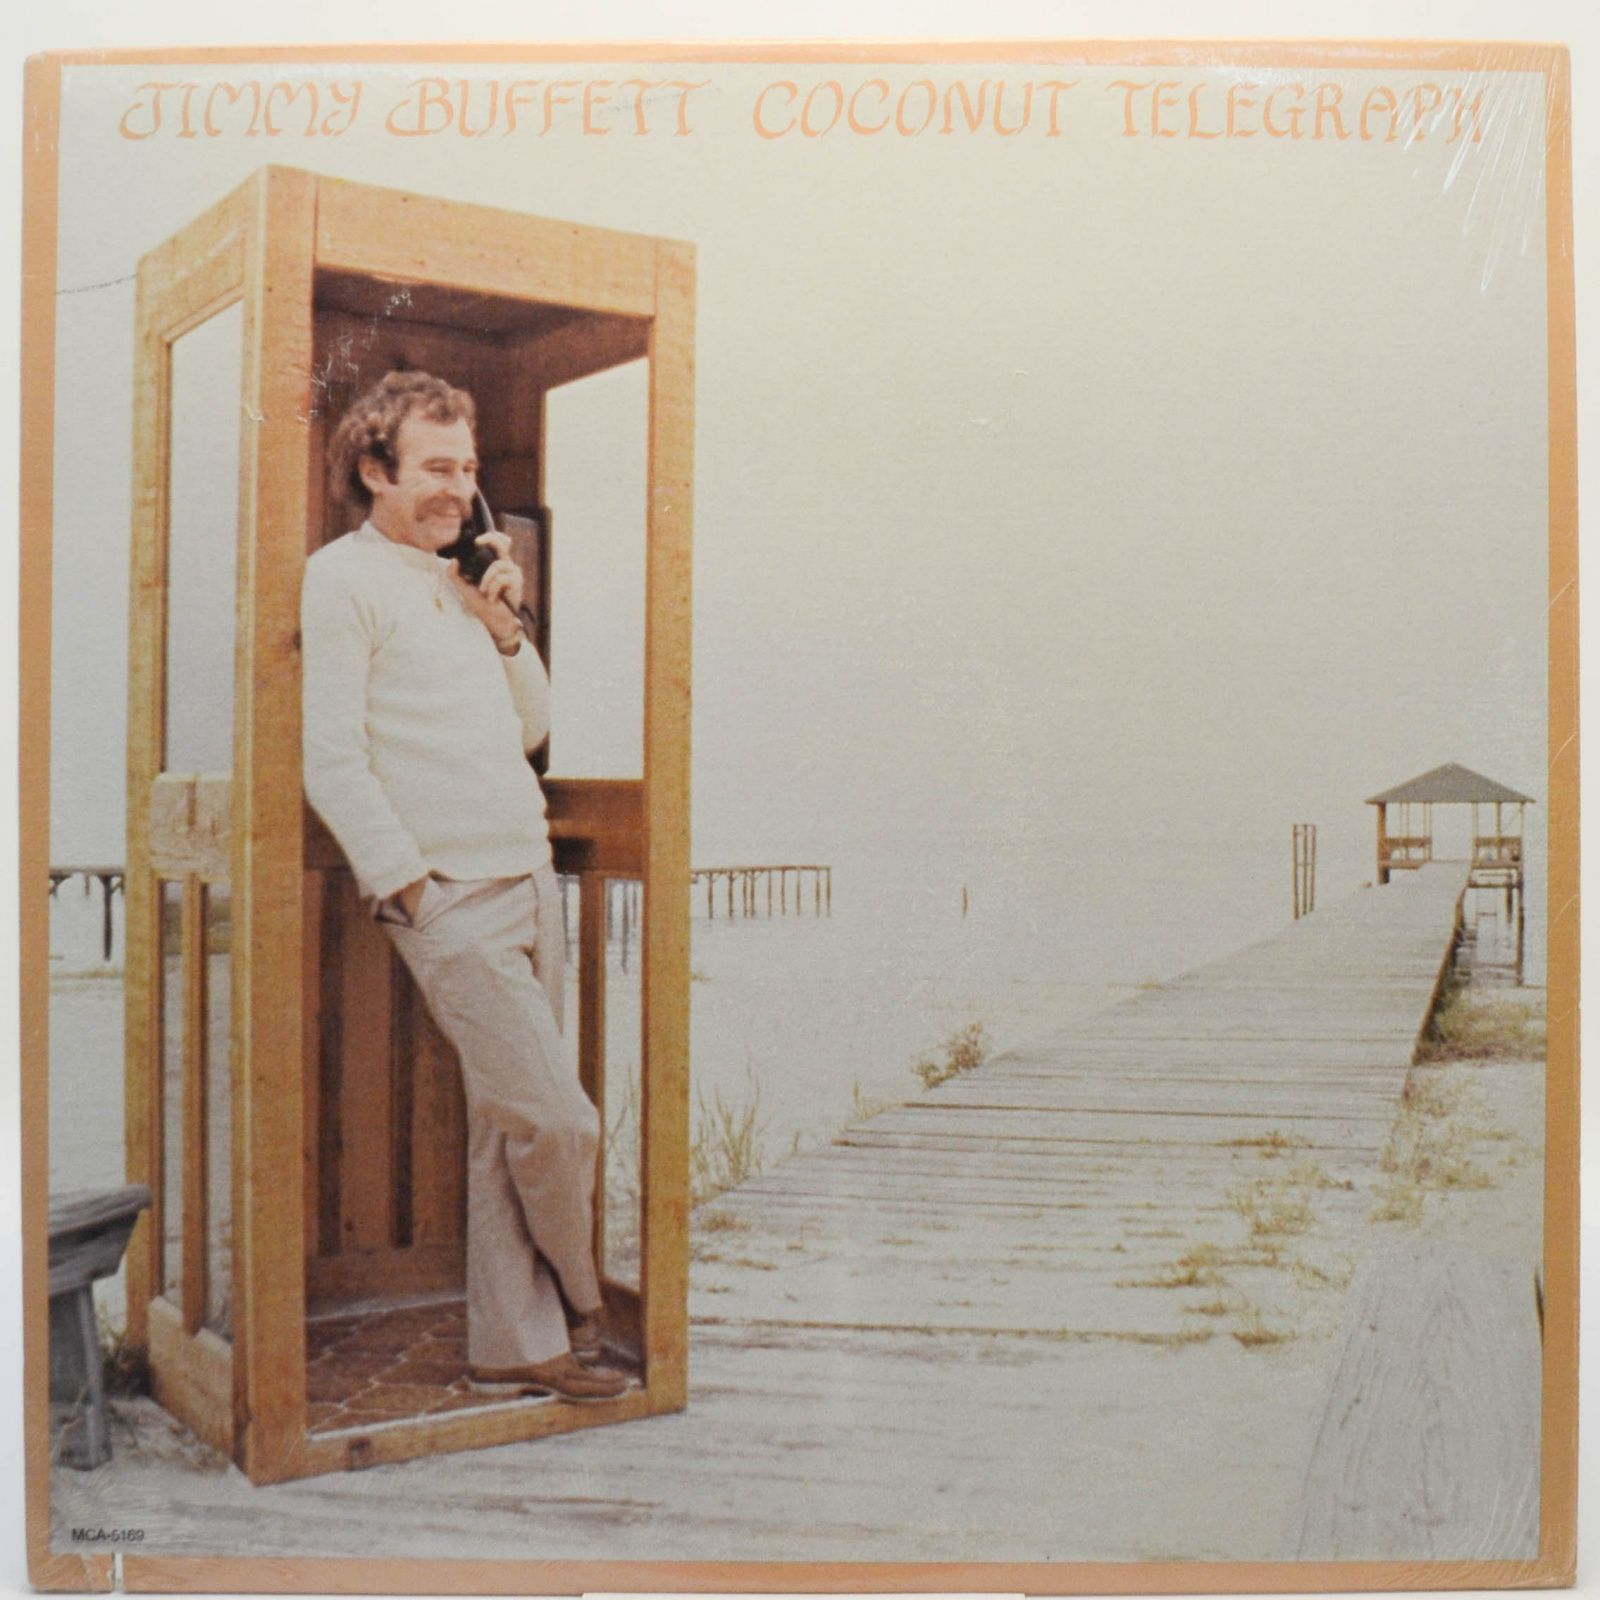 Jimmy Buffett — Coconut Telegraph, 1981